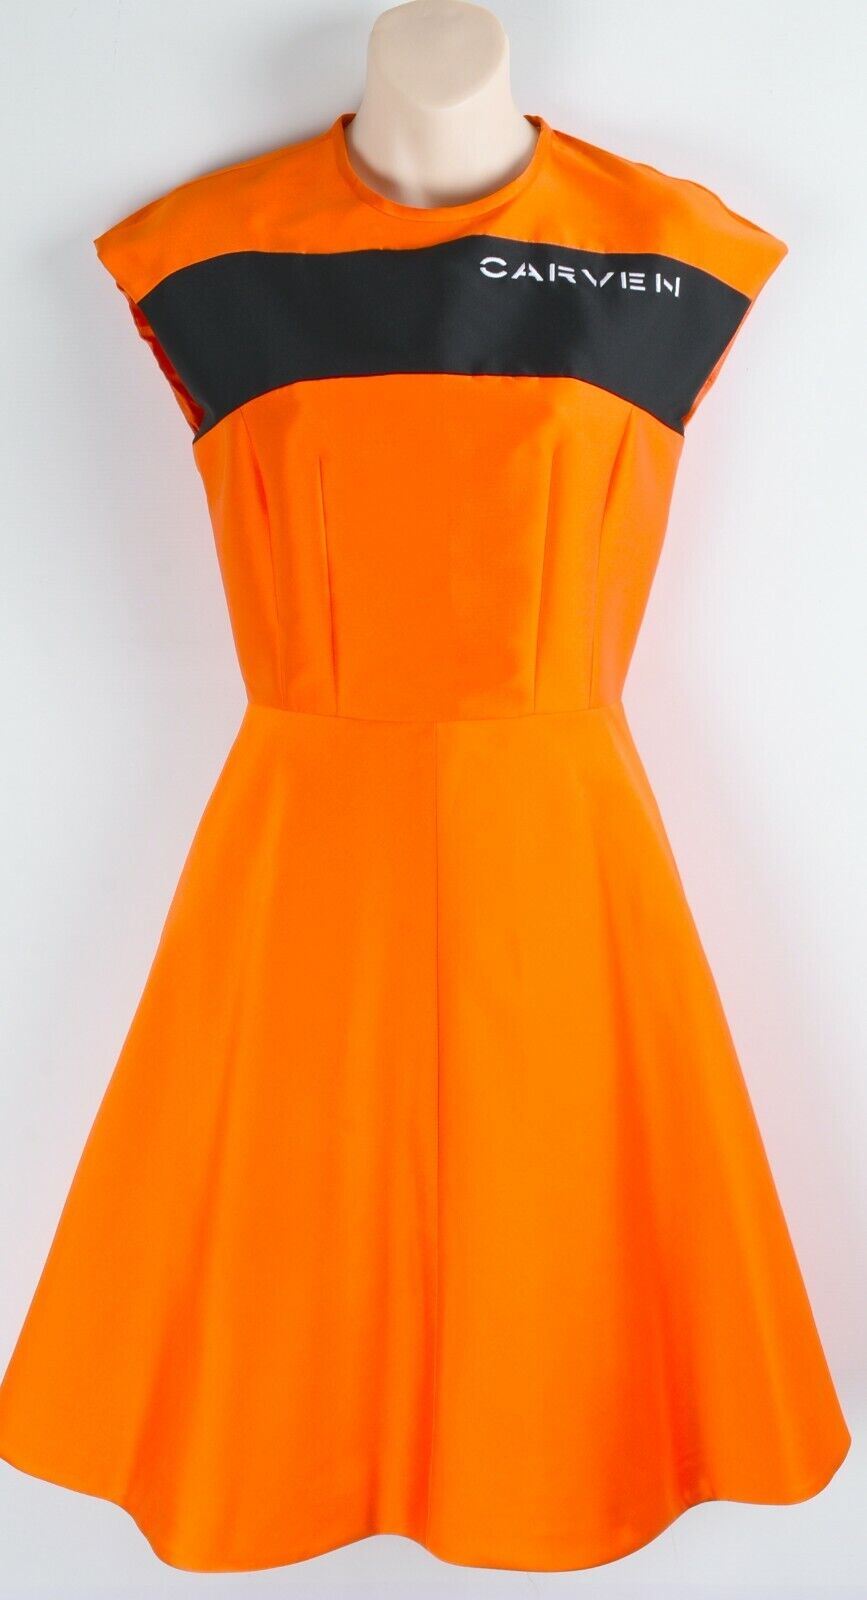 CARVEN Women's Orange/Black Skater Dress, size UK 6